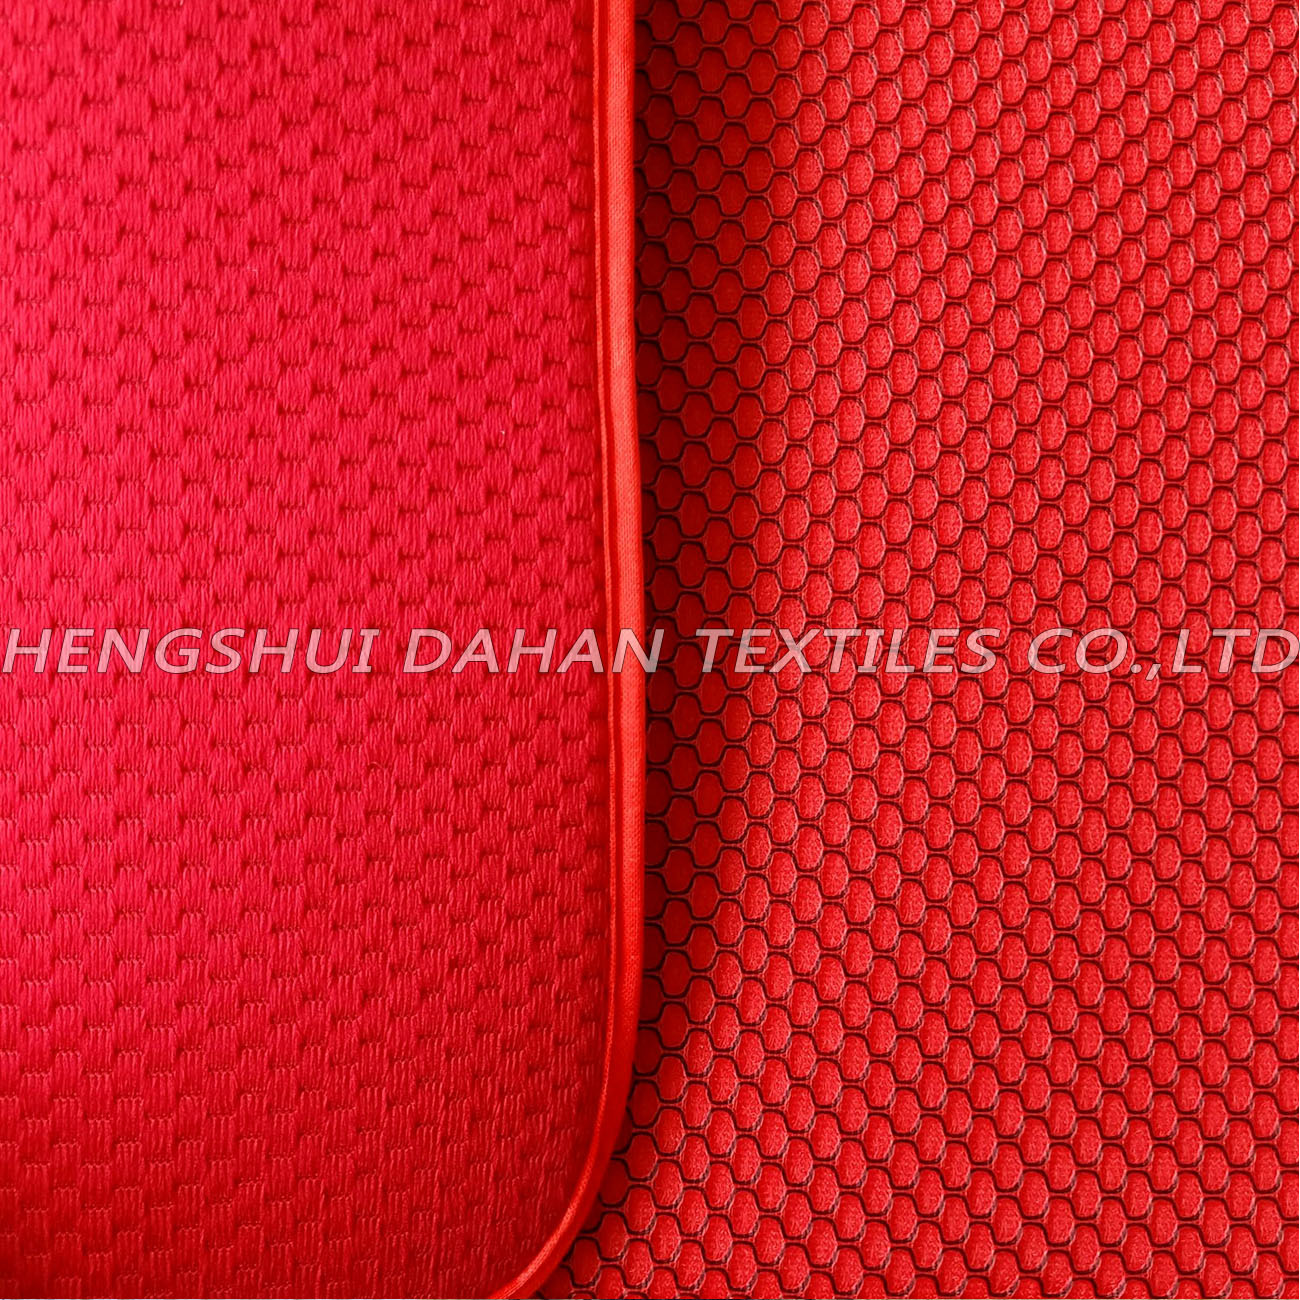 PM11 100%polyester plain colour dish drying mat.